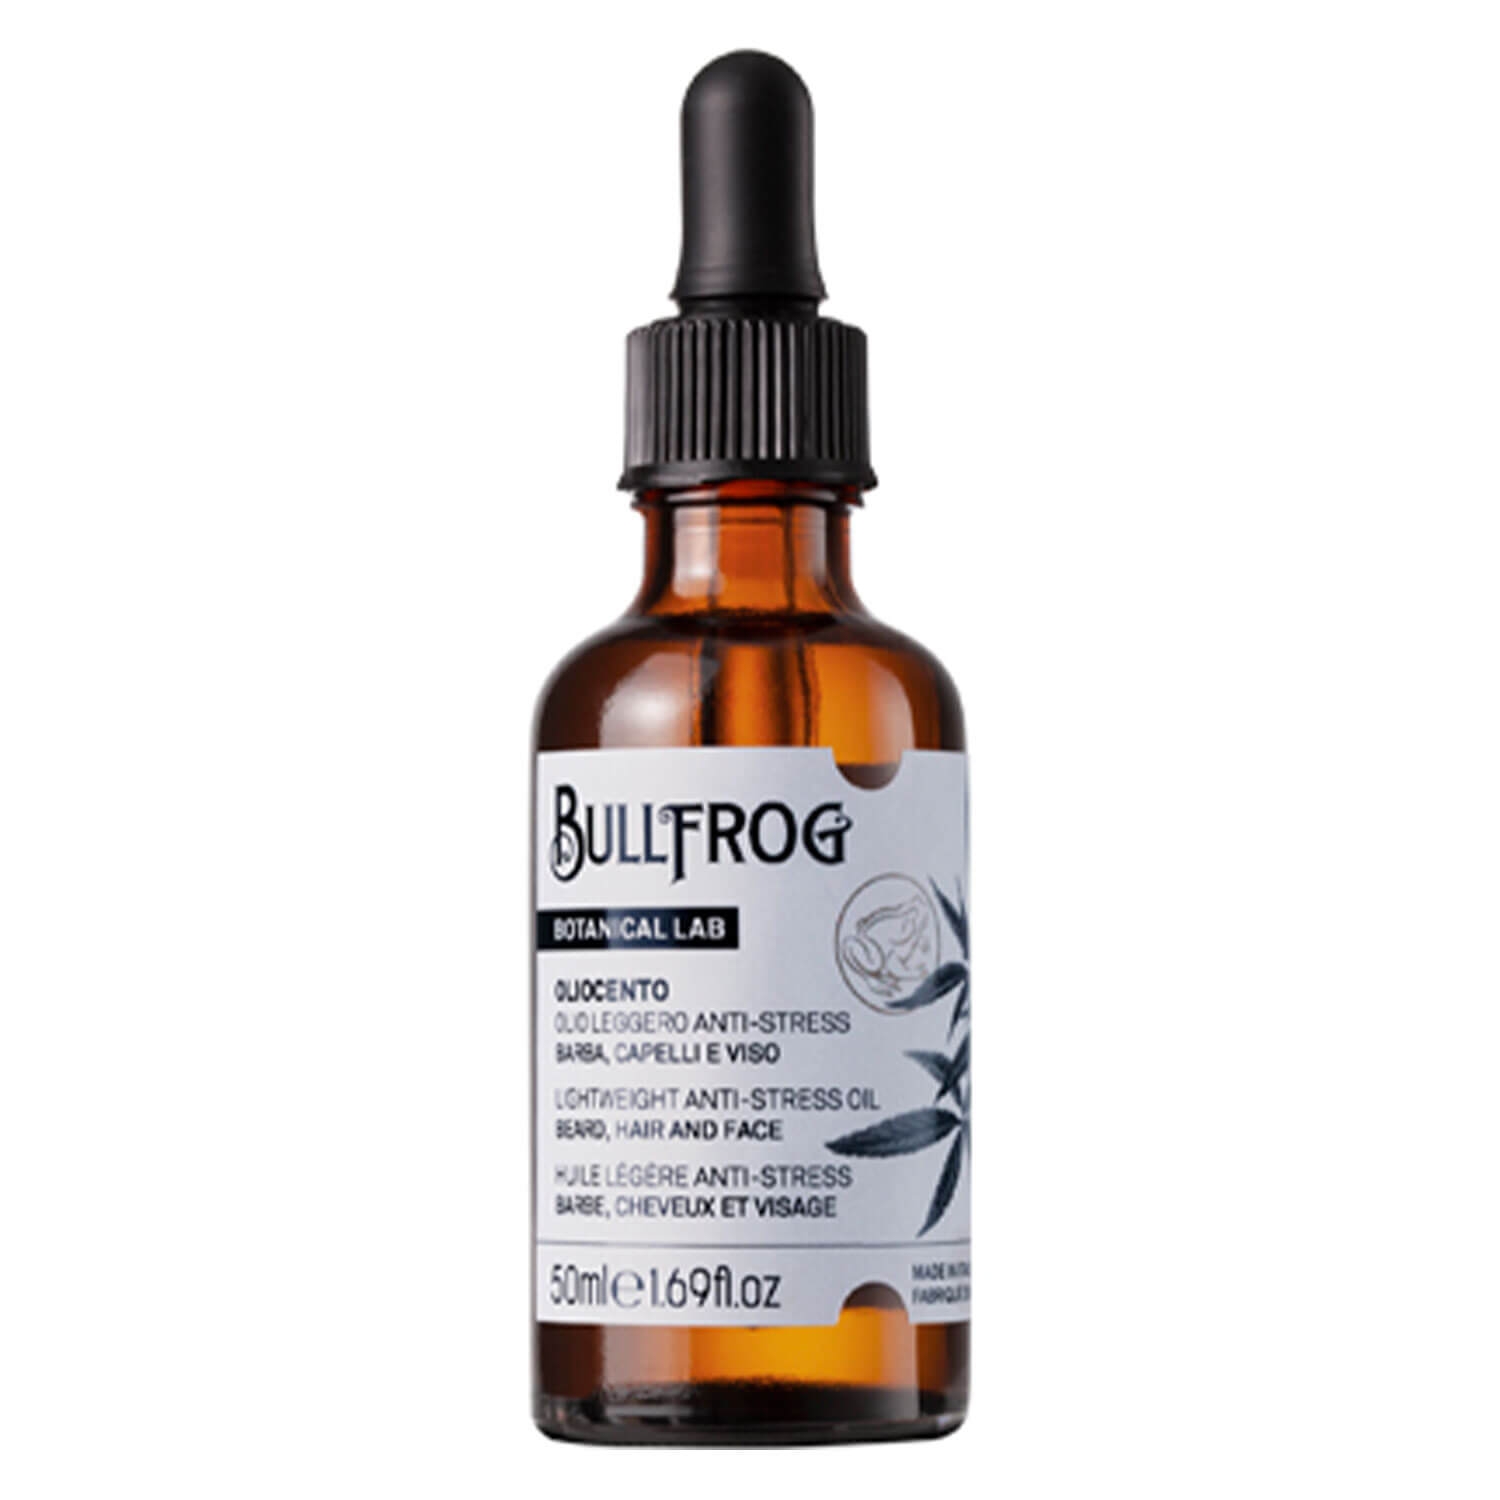 Produktbild von BULLFROG - Oliocento Lightweight Anti-Stress Oil